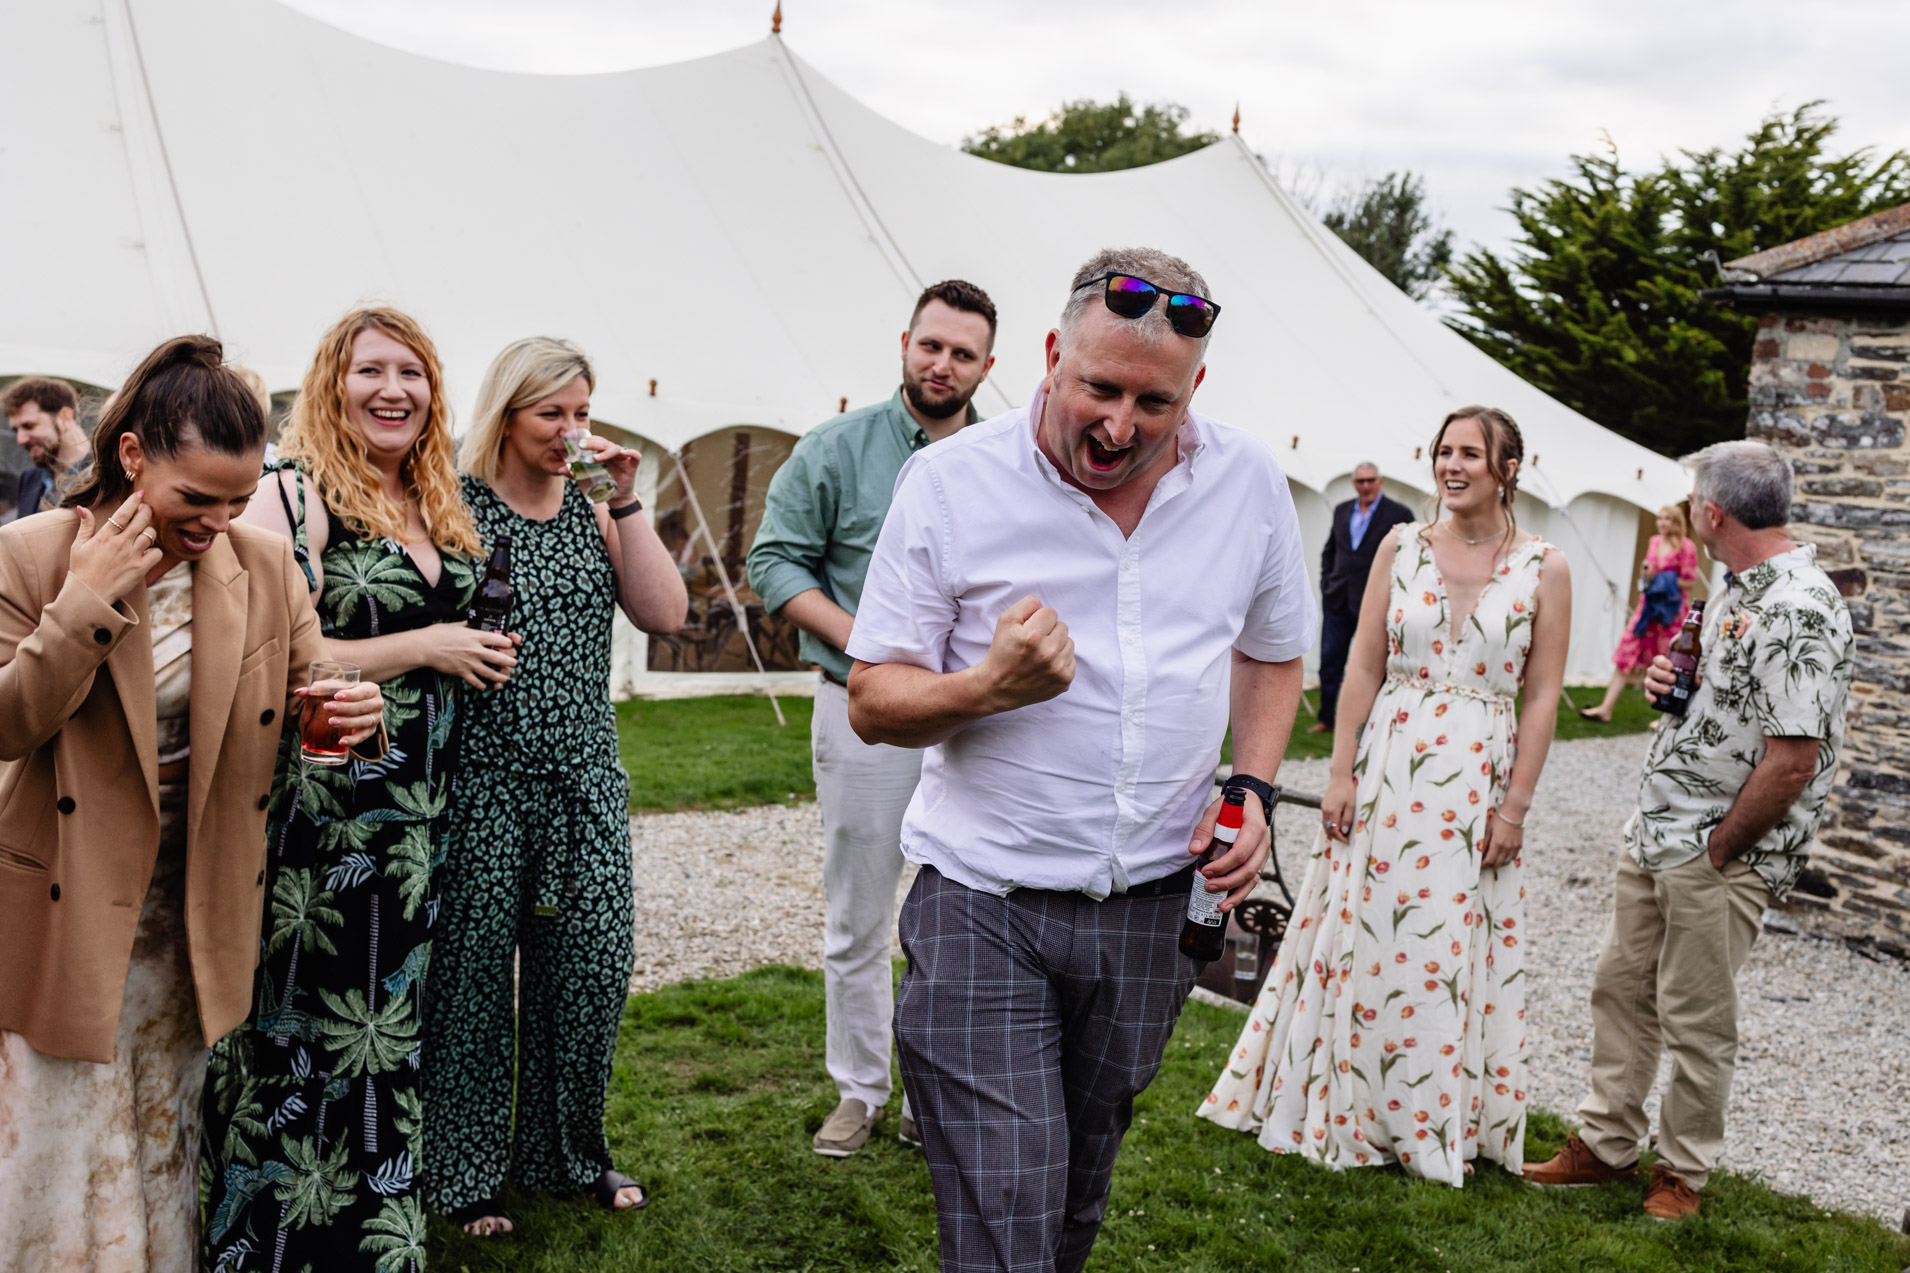 guests having fun with lawn games at wonwood barton wedding